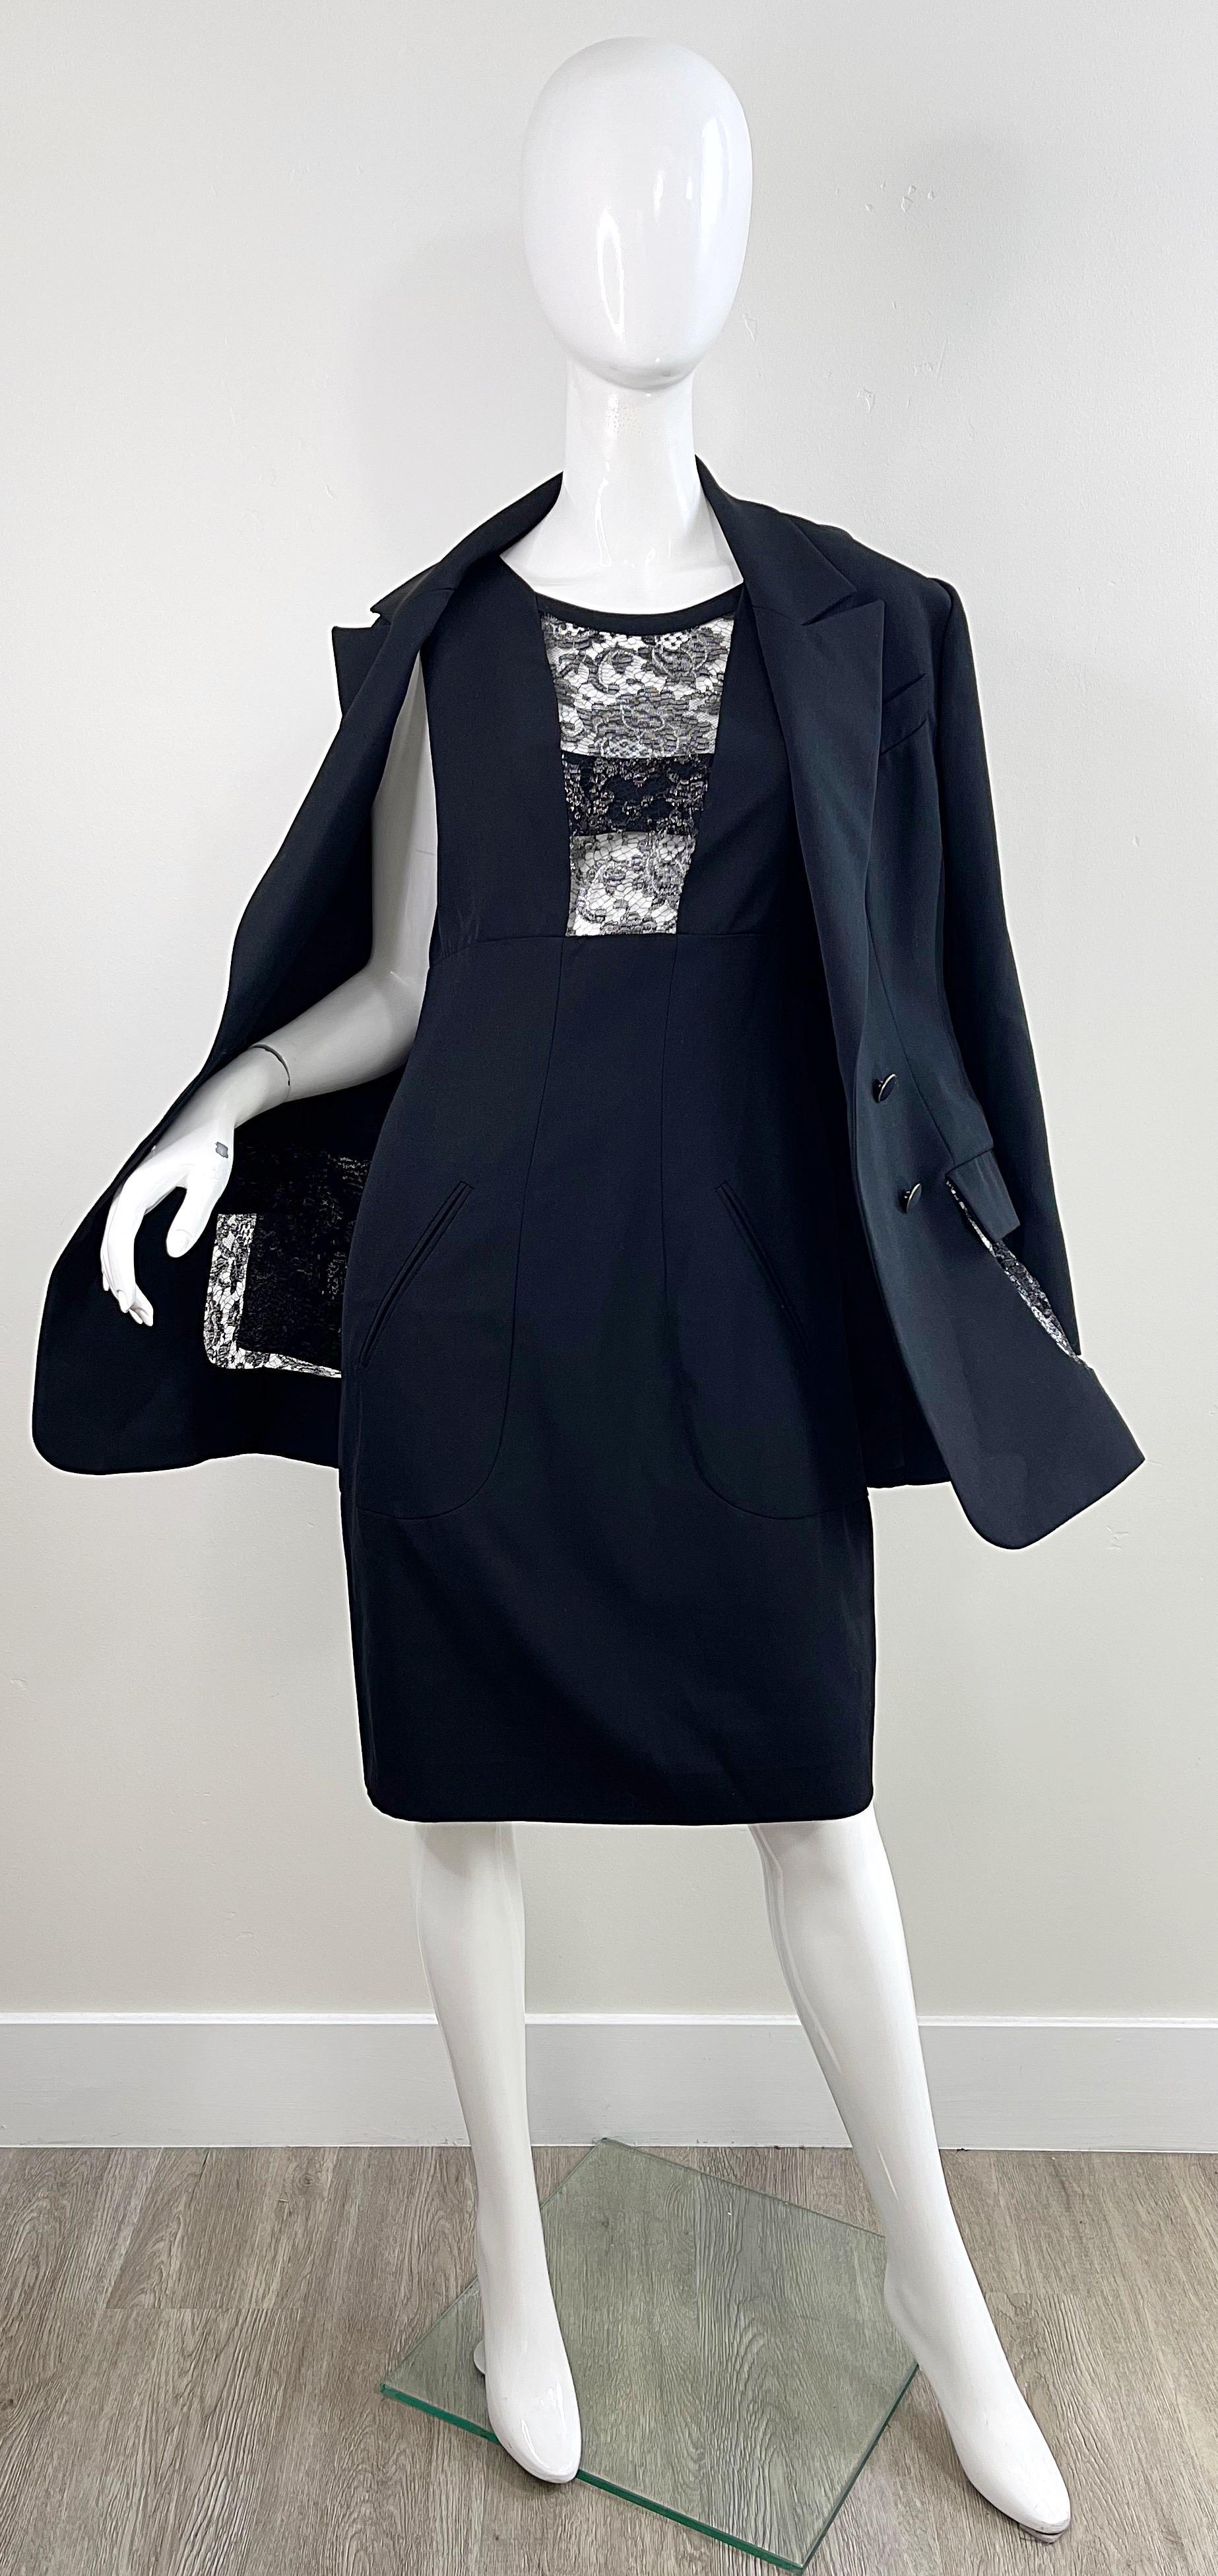 Women's Karl Lagerfeld 1980s Black Lace Cut - Out Size 44 / 10 12 Vintage Dress + Jacket For Sale